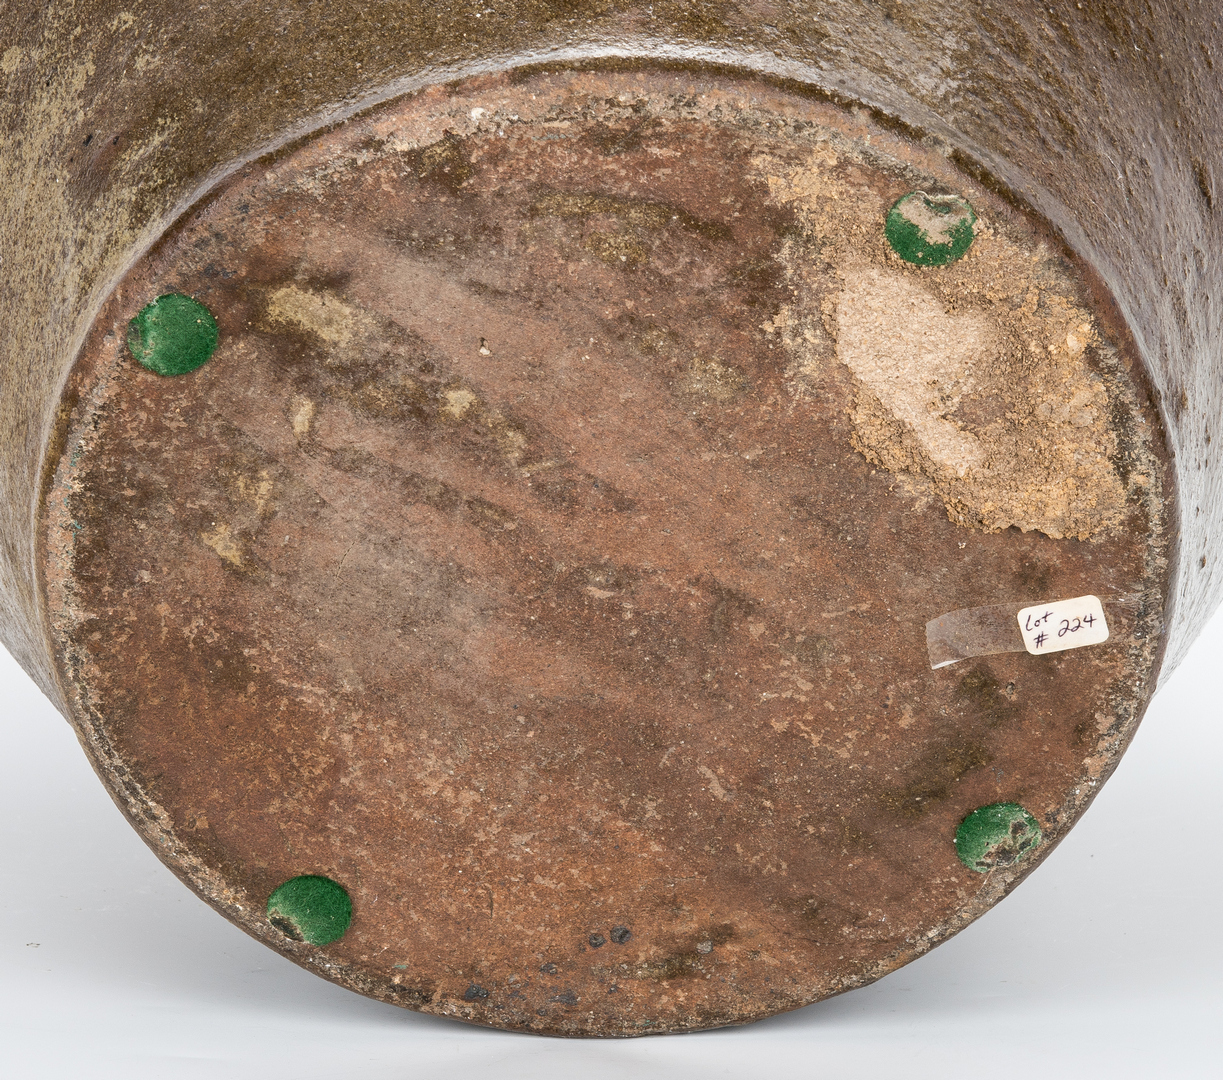 Lot 178: Monumental Ten Gallon Daniel Seagle Pottery Stoneware Jar